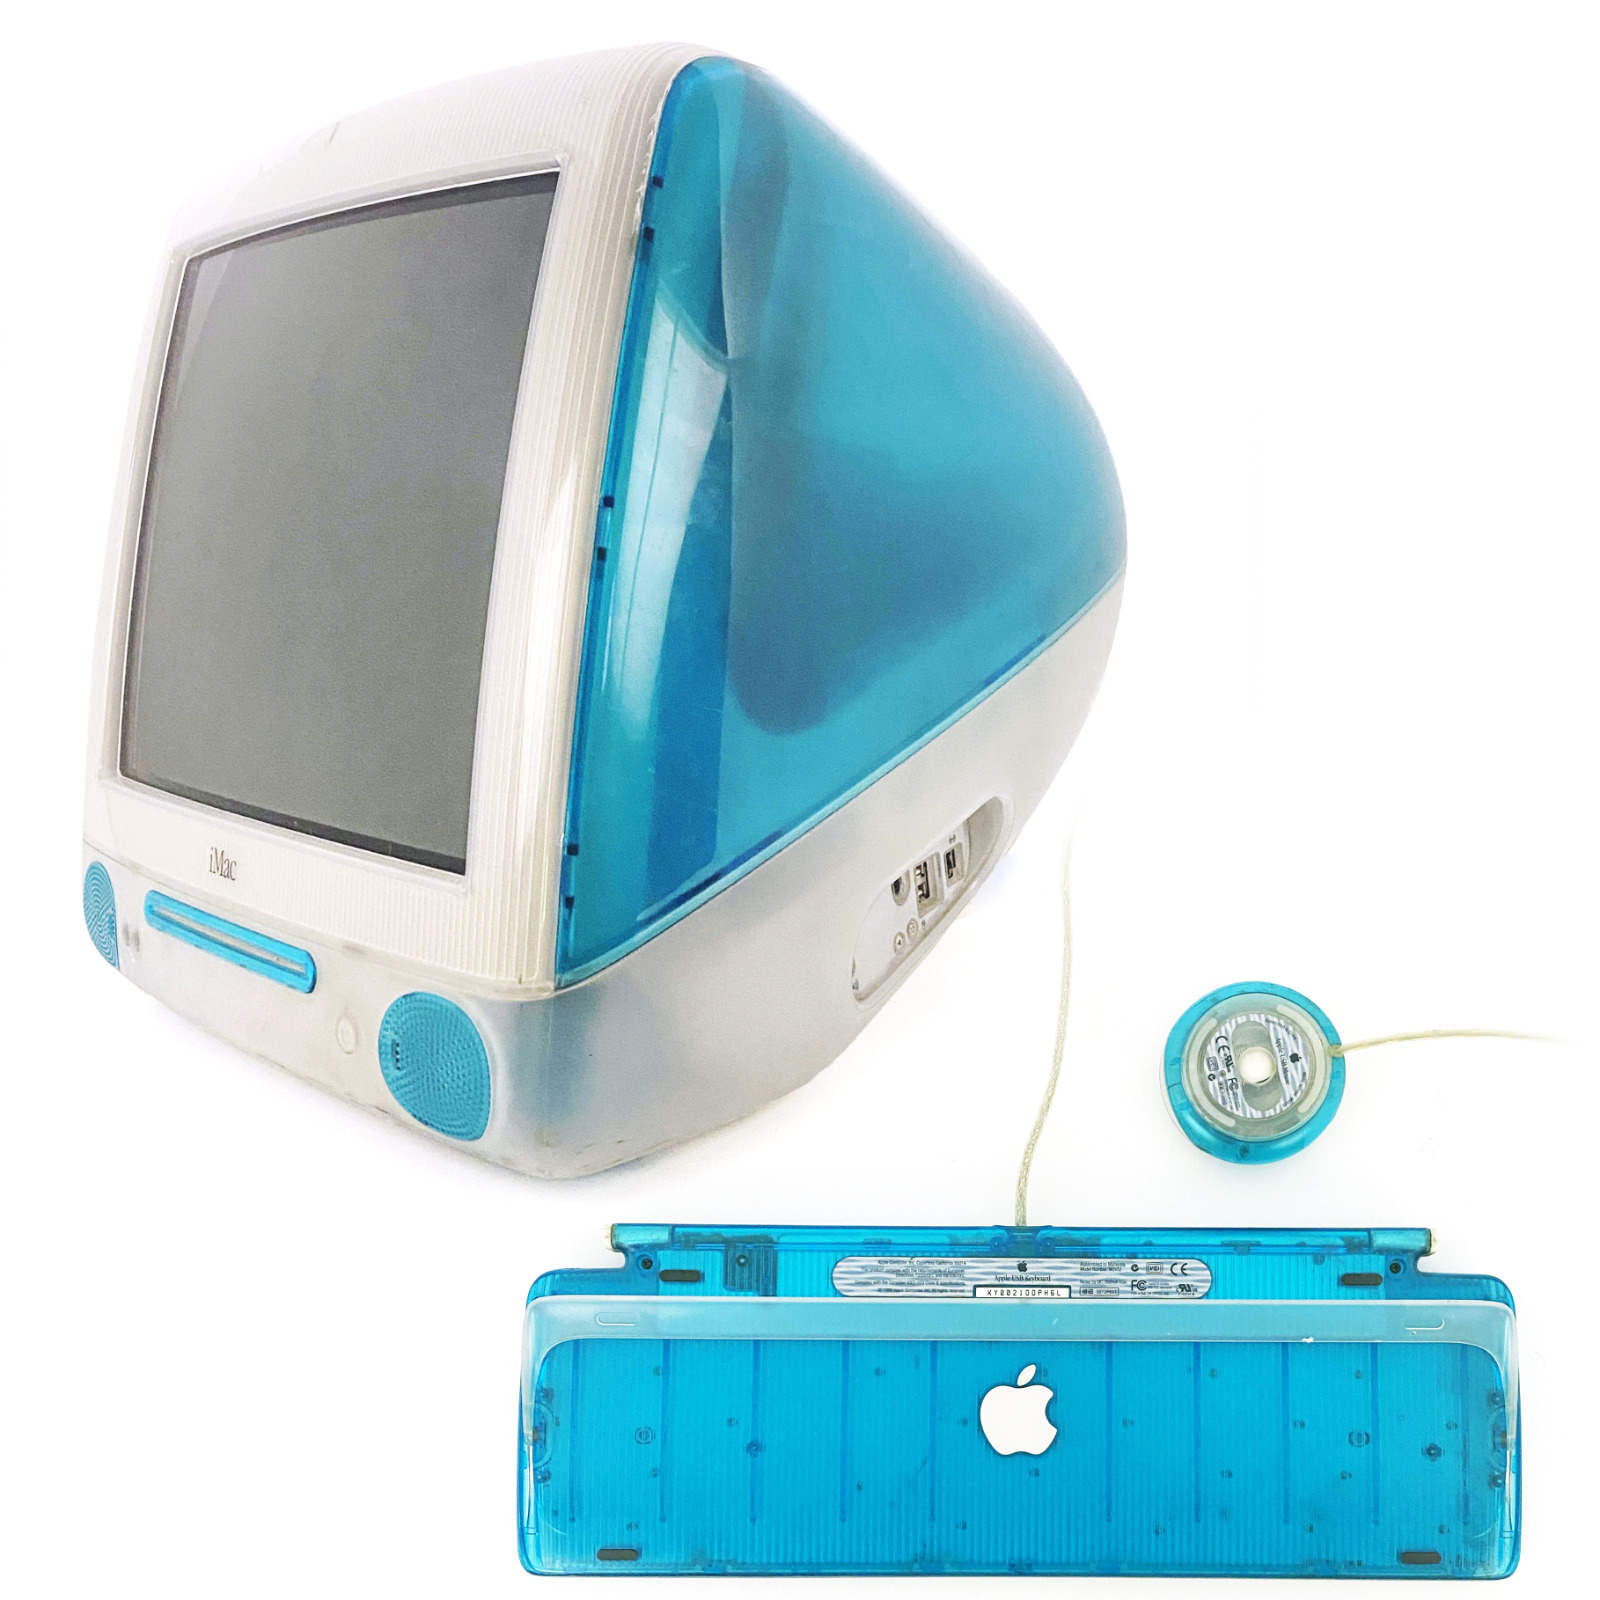 Apple iMac G3 Blueberry M5521, 350MHz 6GB HD 64MB Ram, 1999 Vtg Working